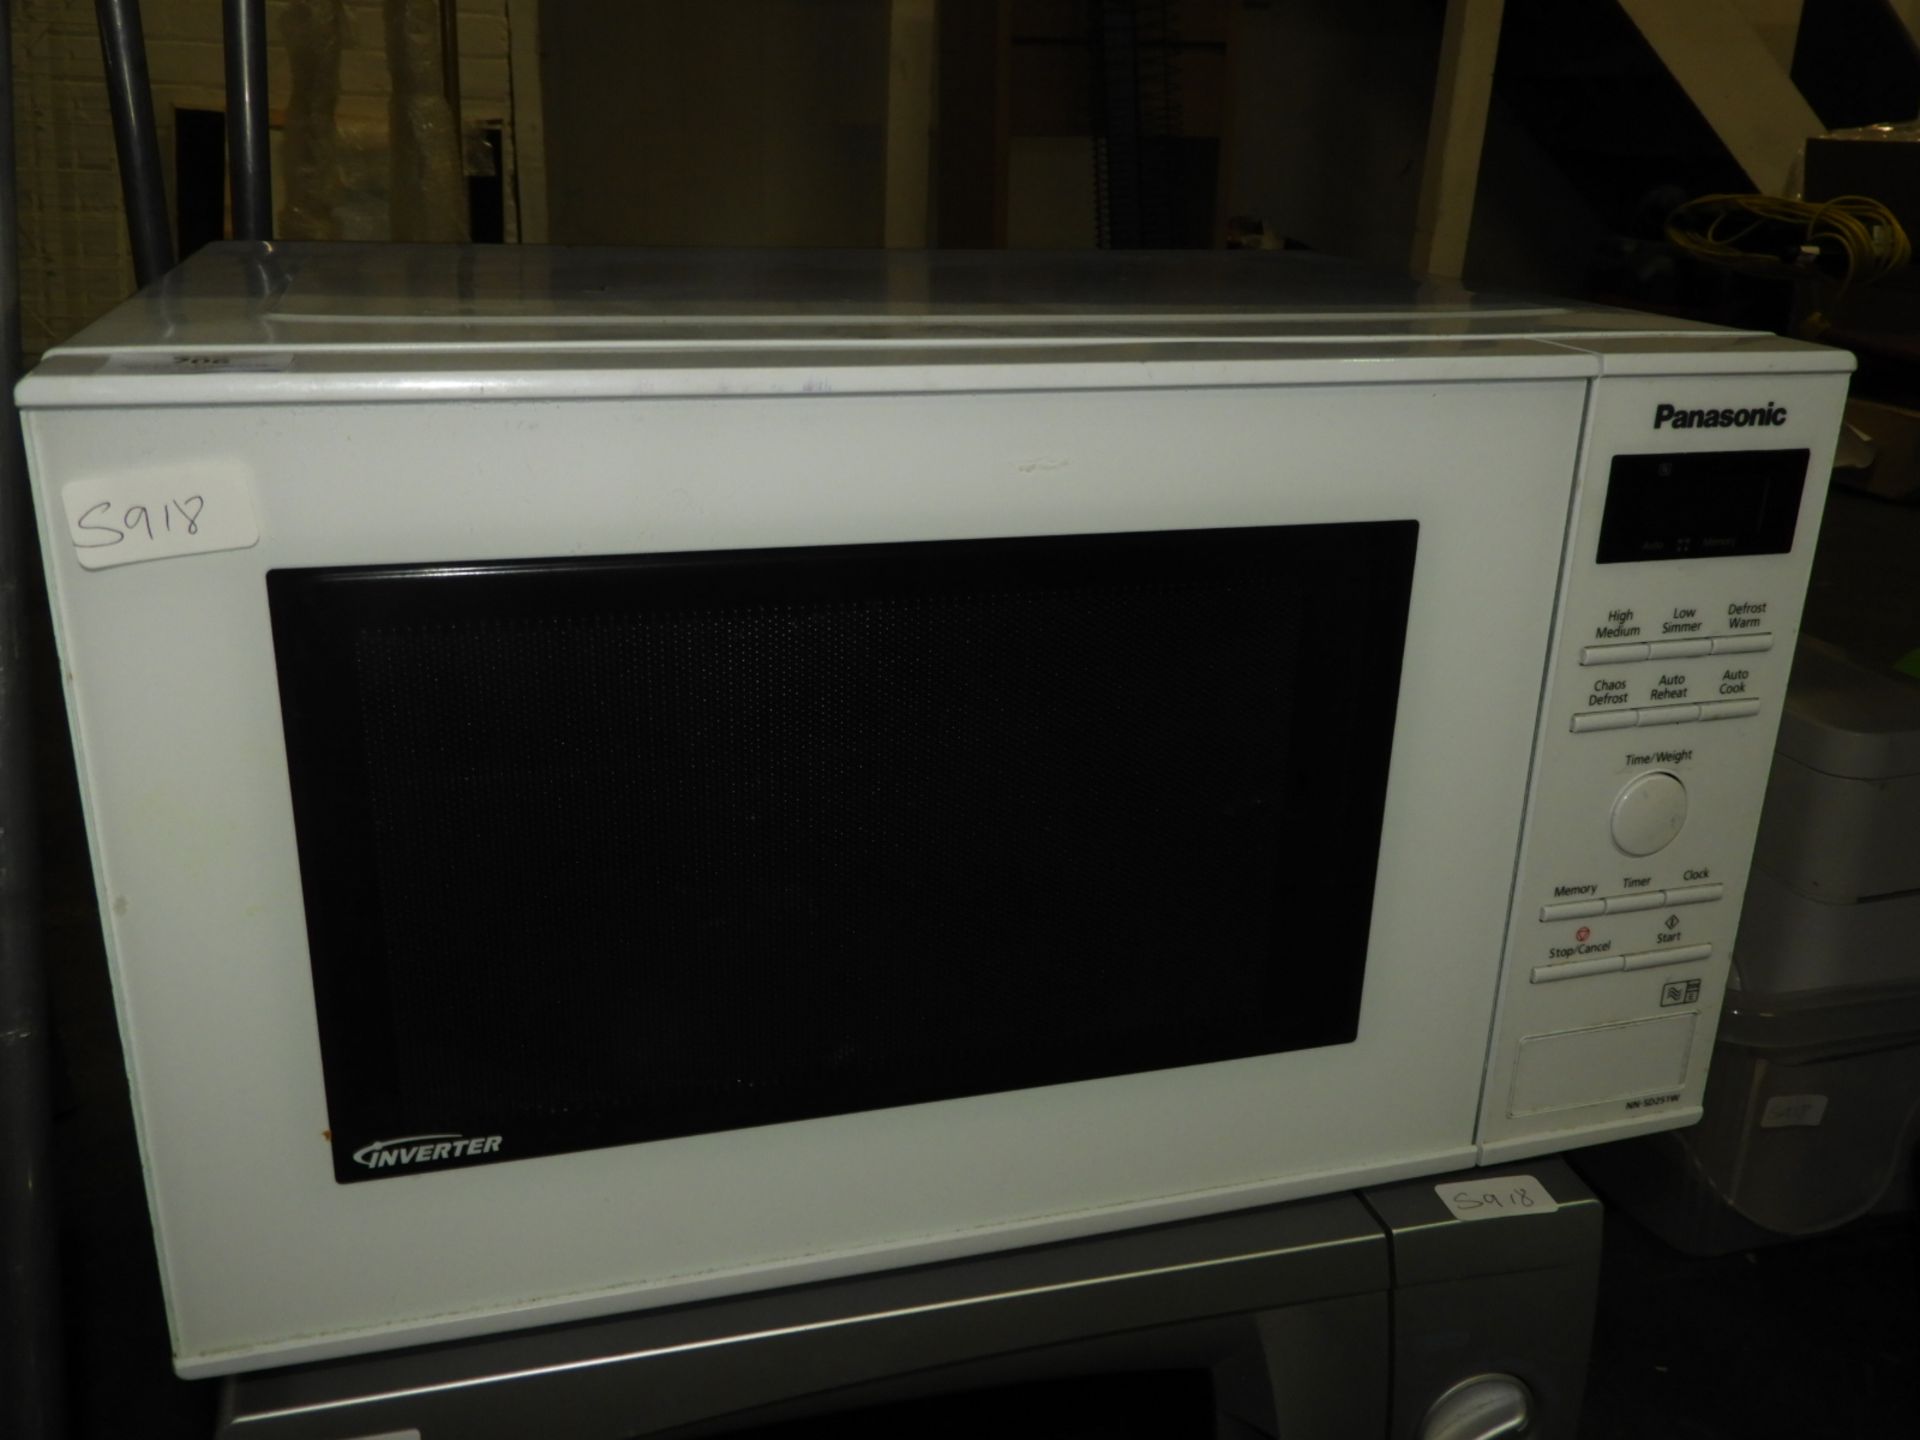 *Panasonic Domestic Microwave Oven